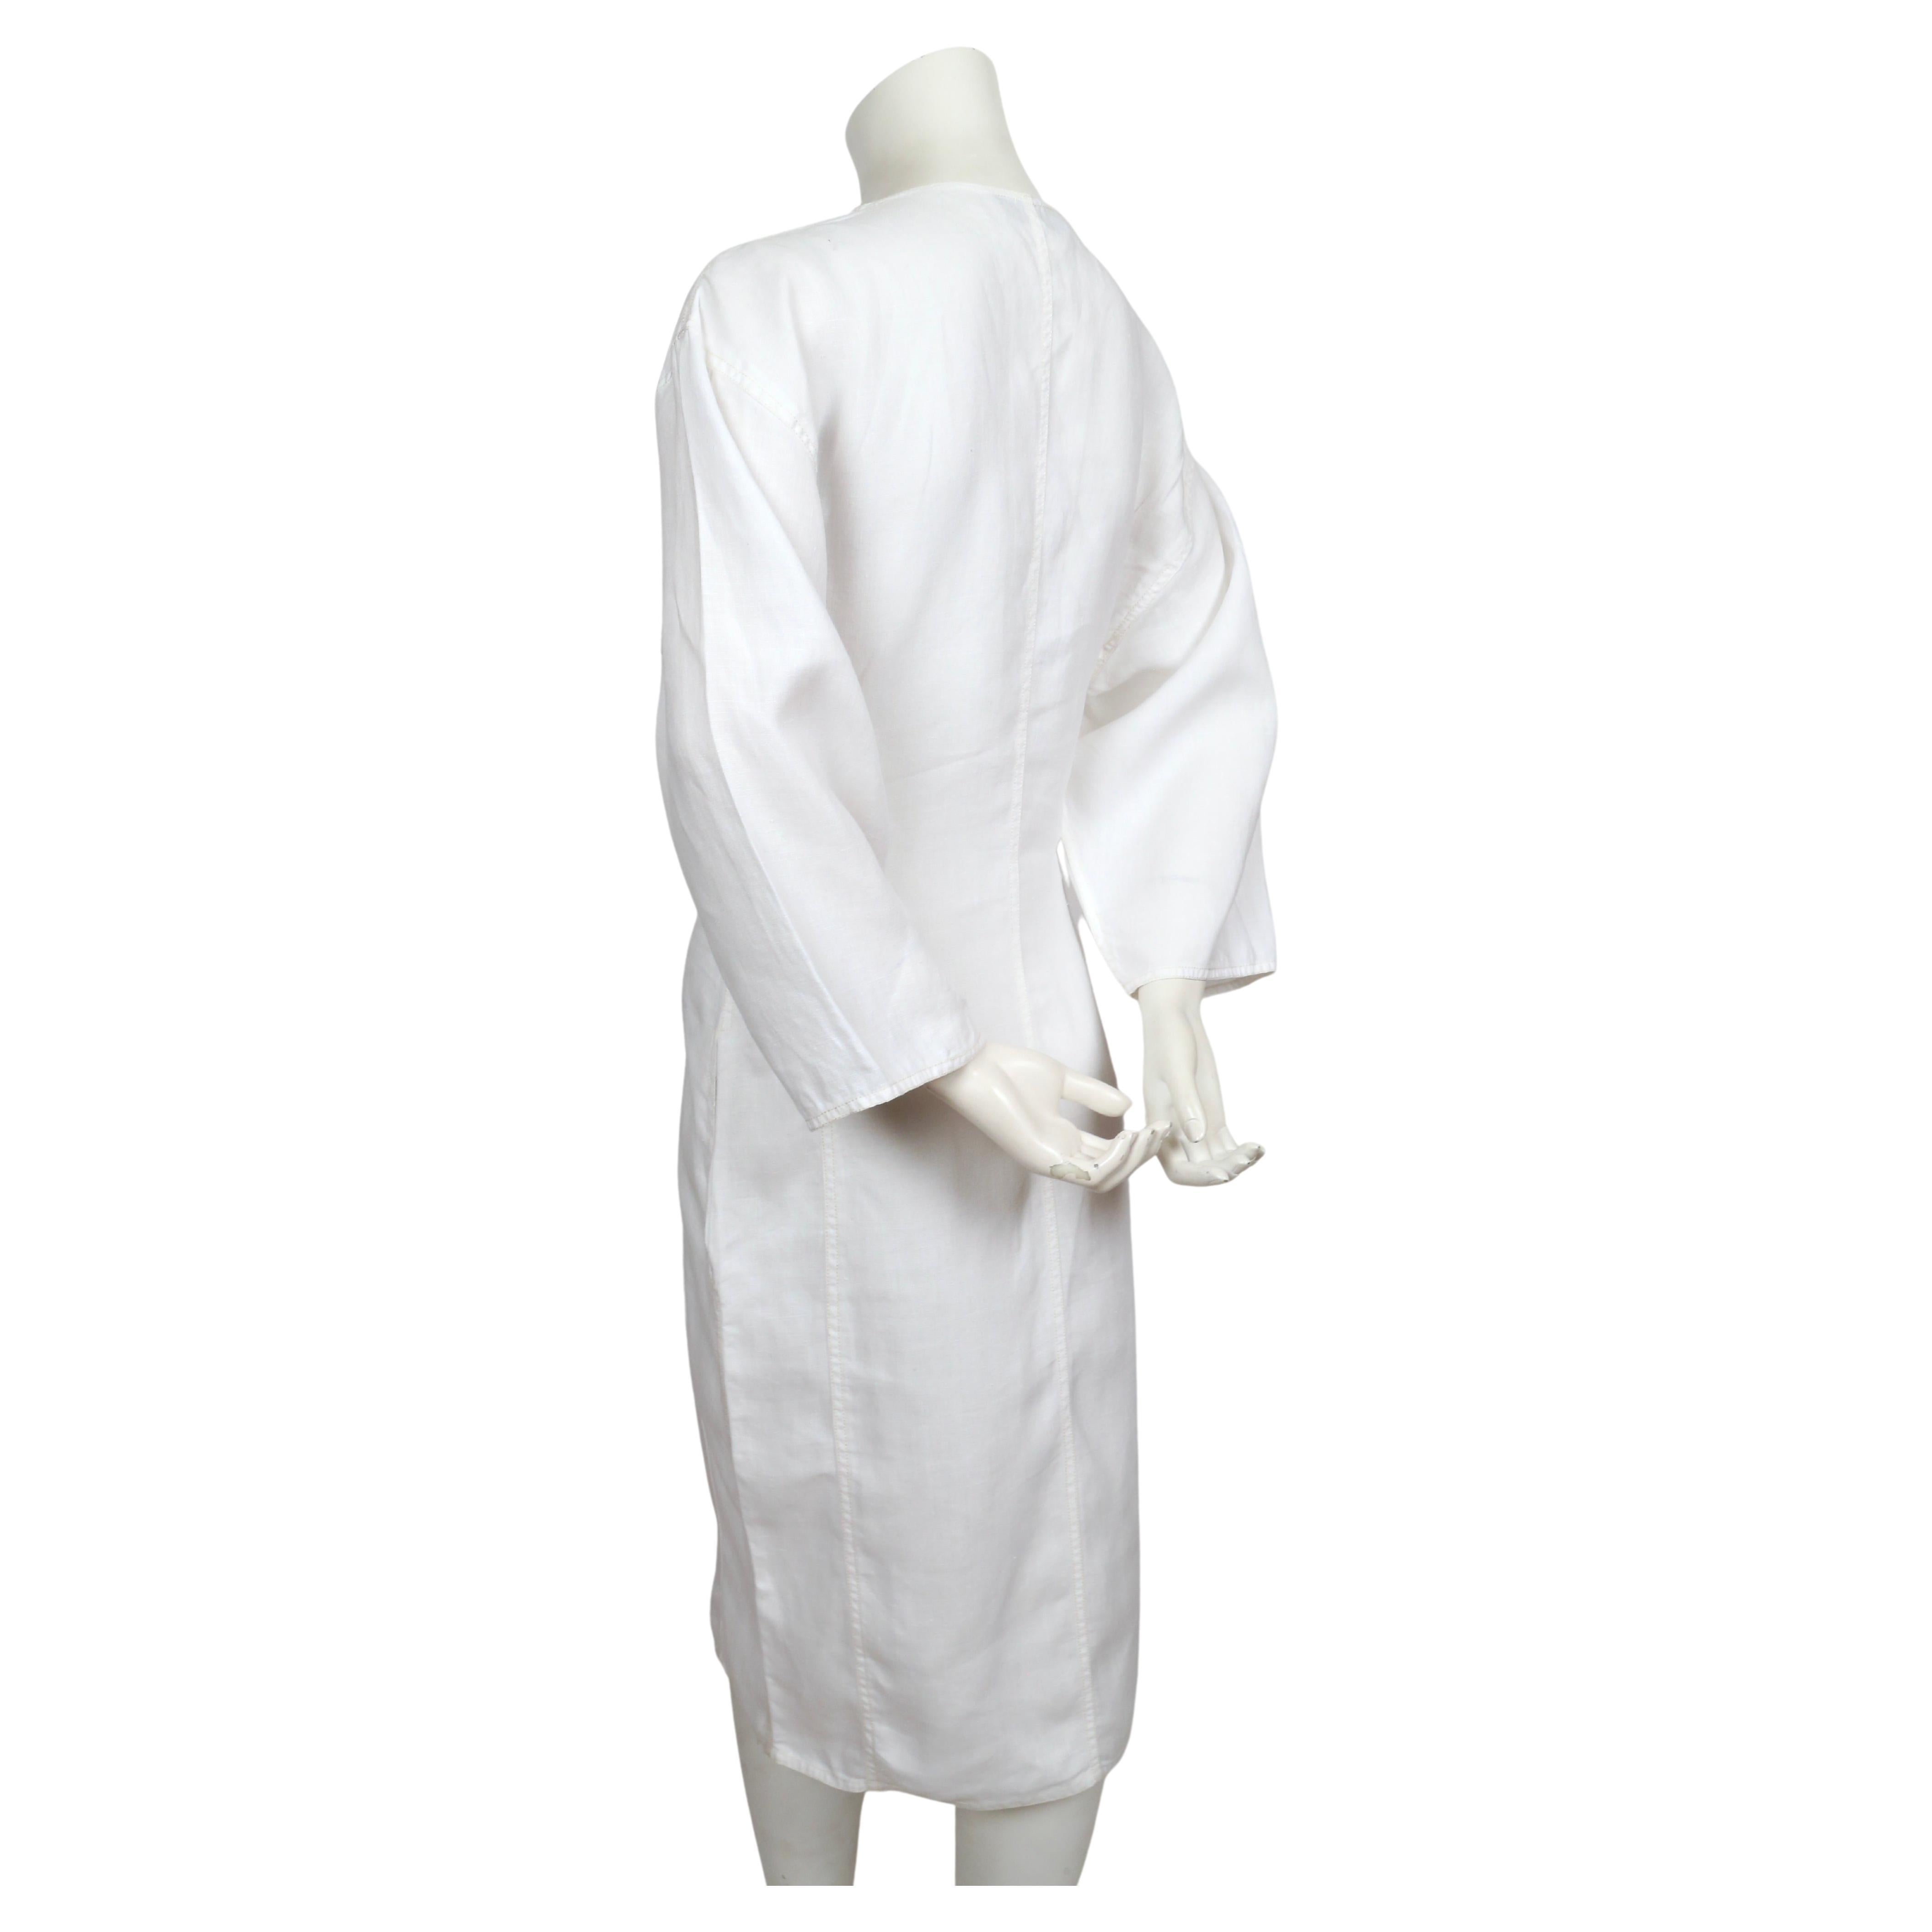 1980's ANNE MARIE BERETTA white linen dress For Sale 2